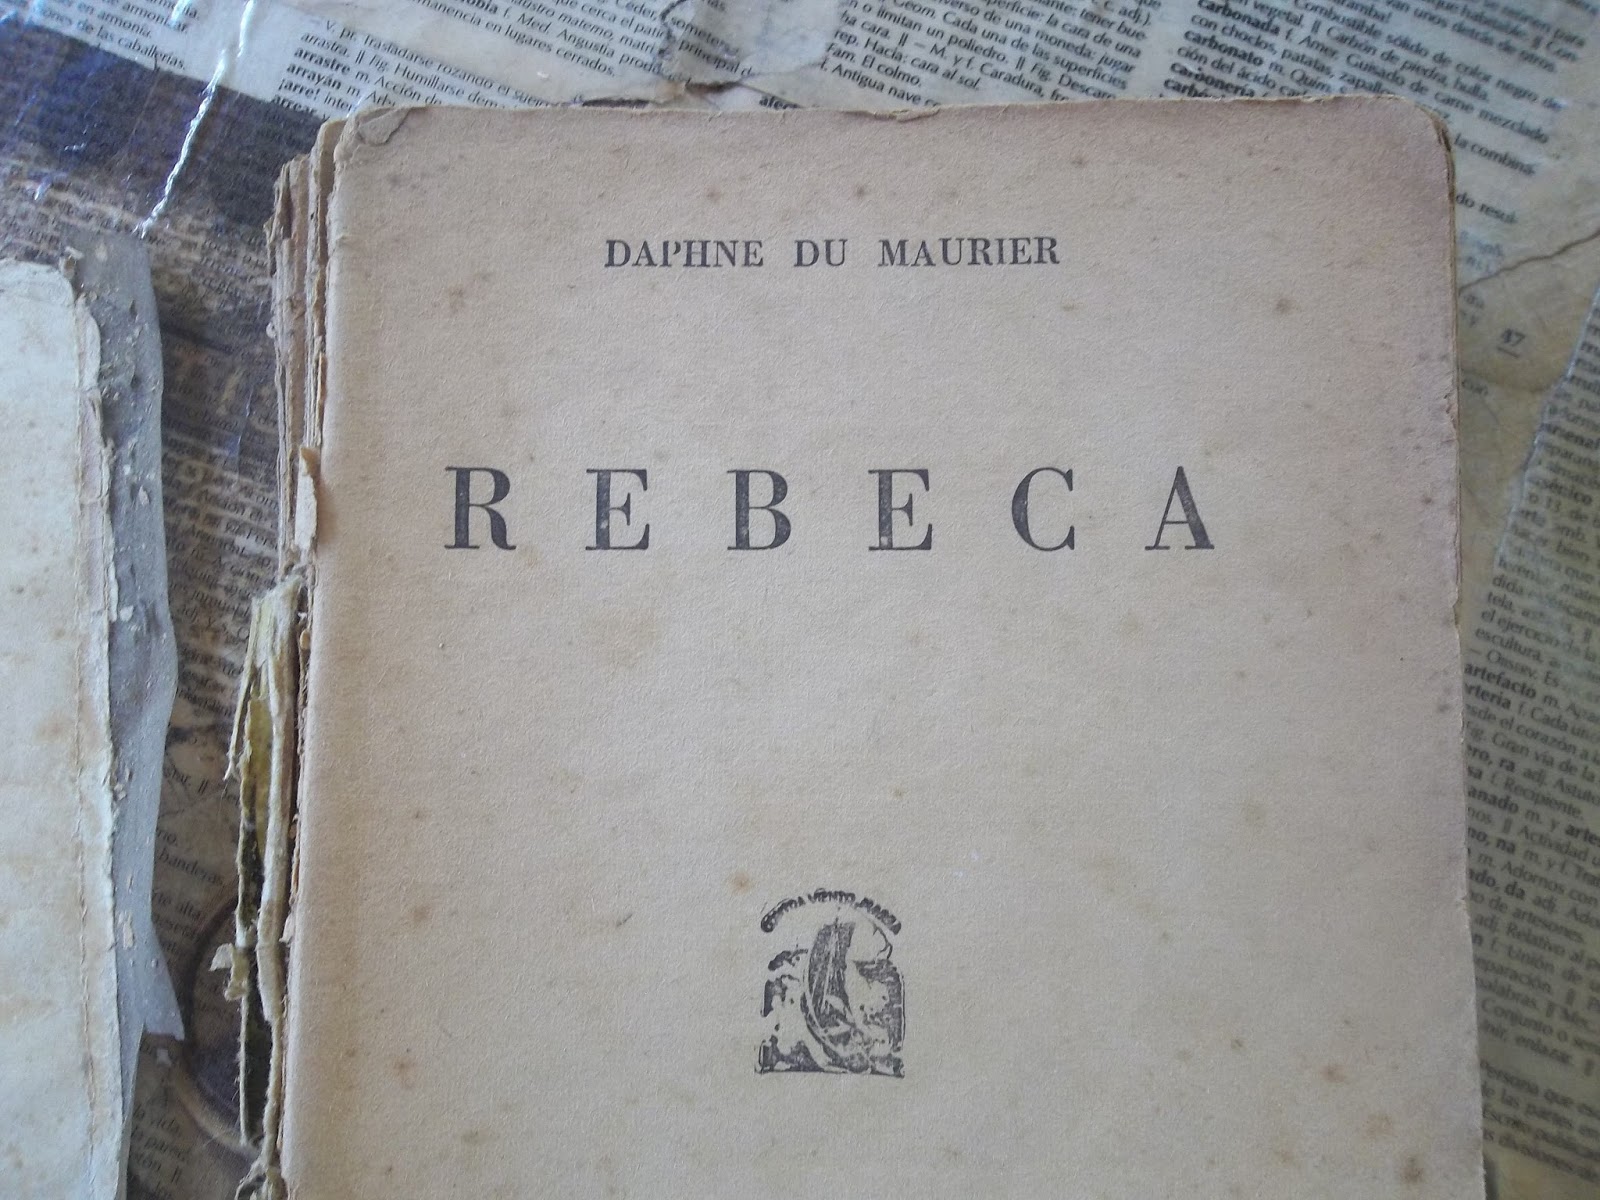  Rebecca, Rebeca - Una Mujer Inolvidable, Rebecca - A